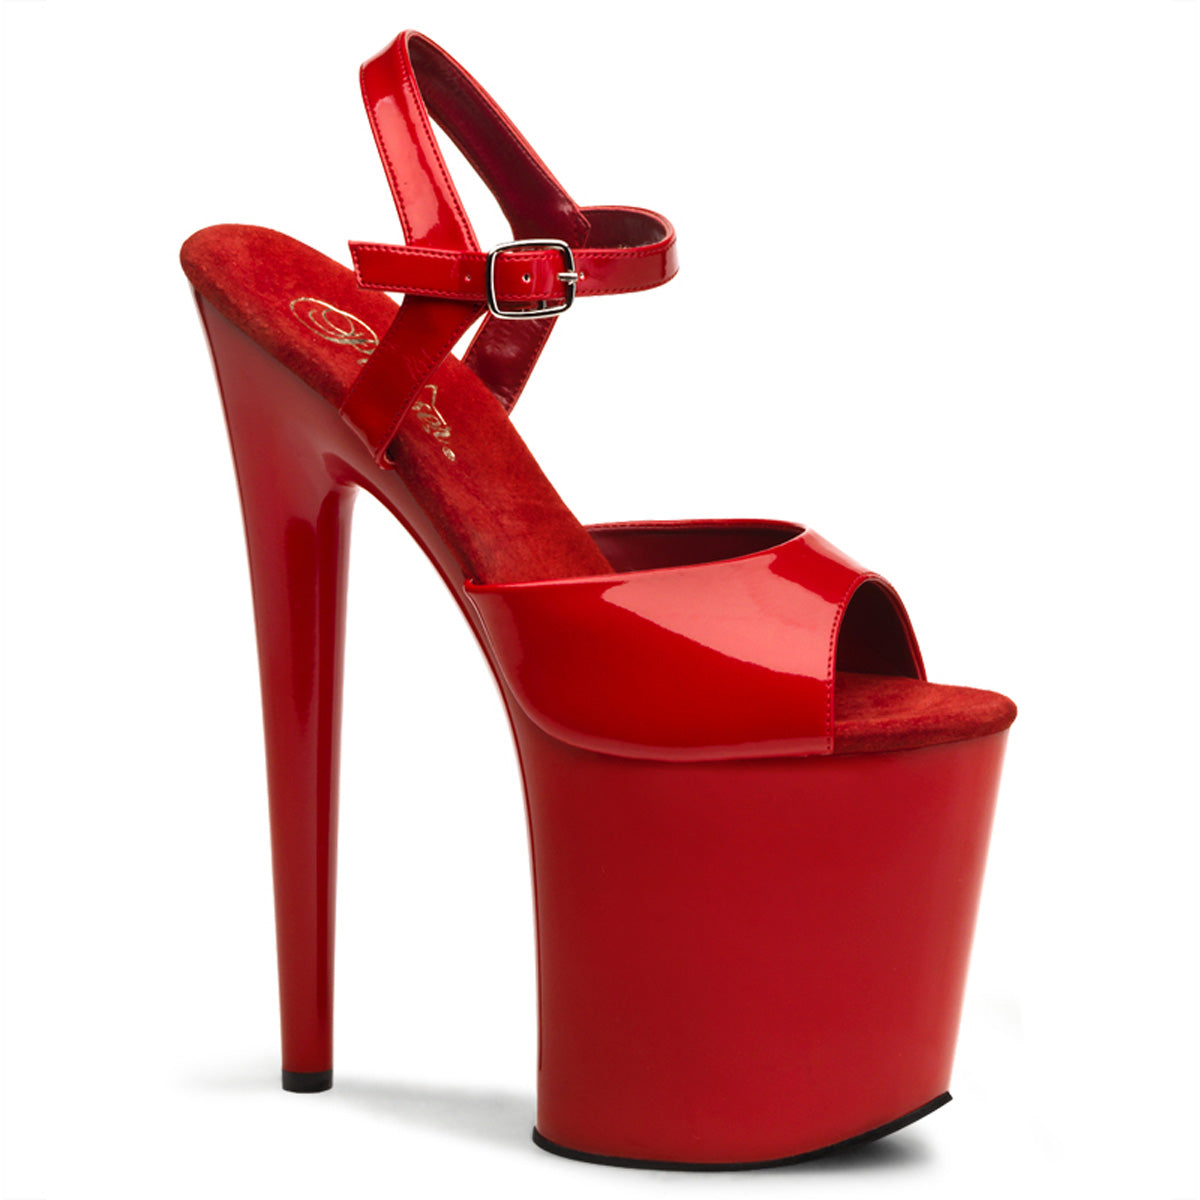 FLAMINGO-809 Red Patent Platform Sandal Pleaser